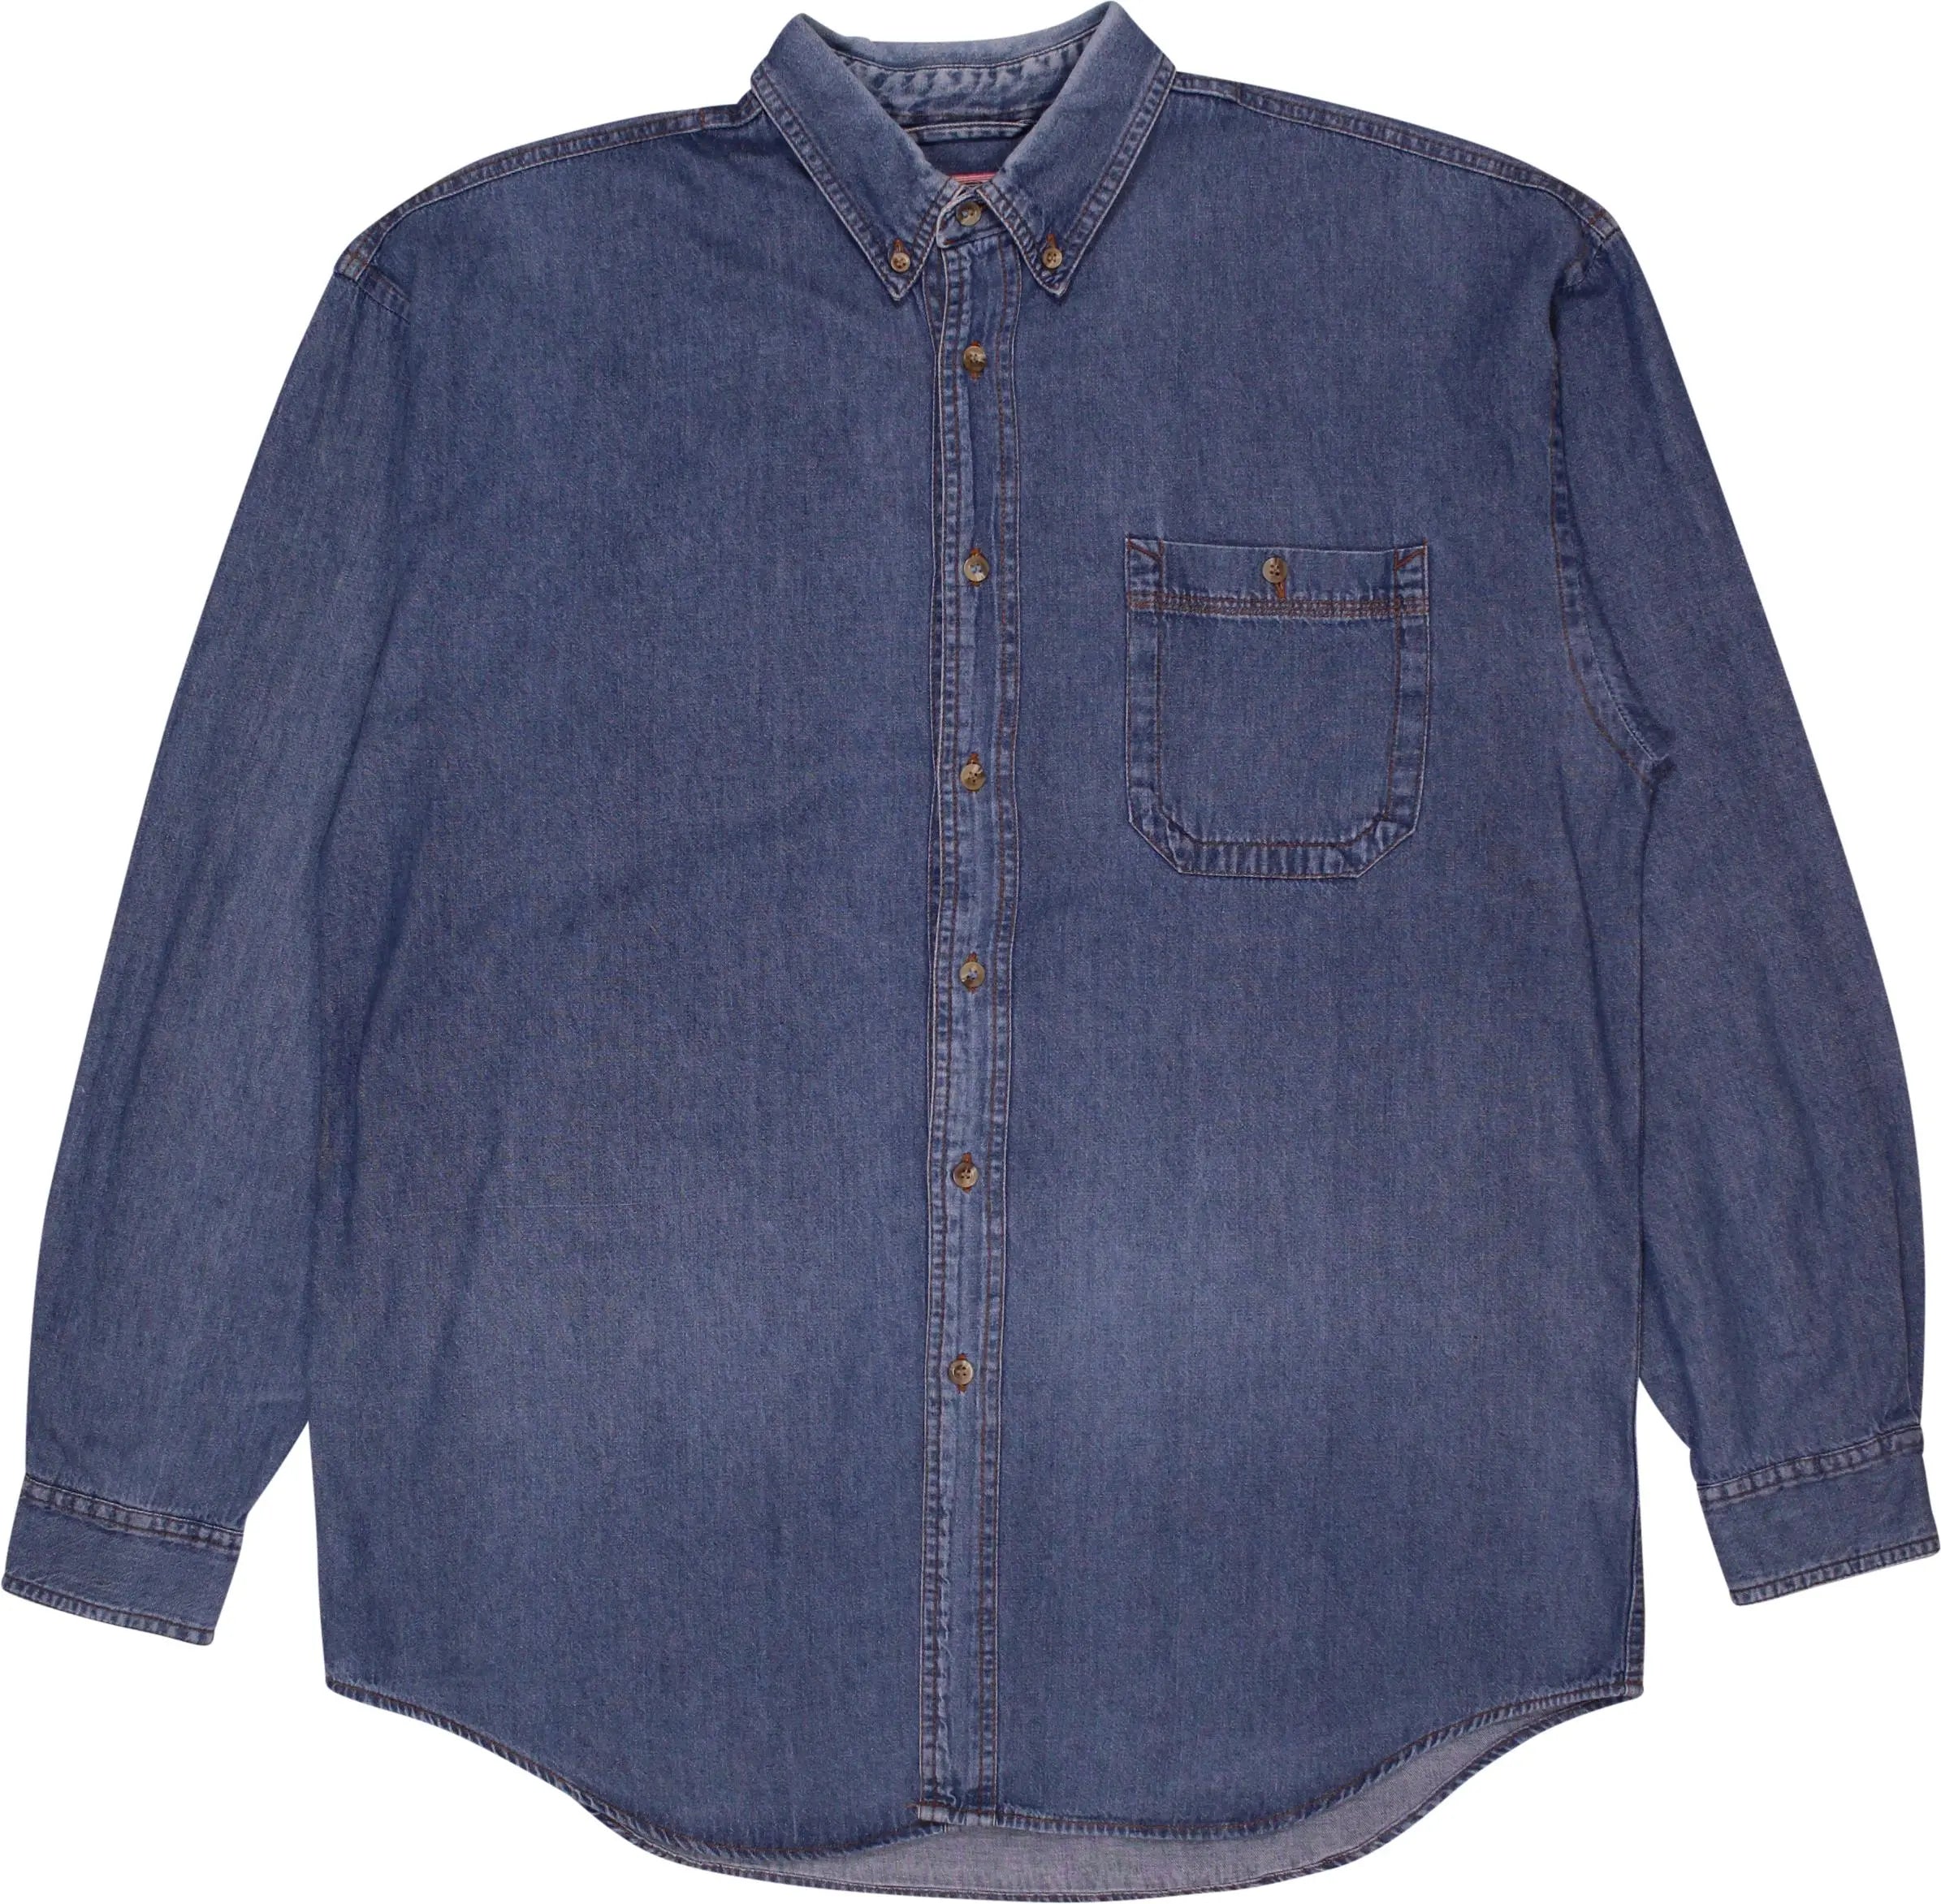 Fashion Best - Denim Shirt- ThriftTale.com - Vintage and second handclothing